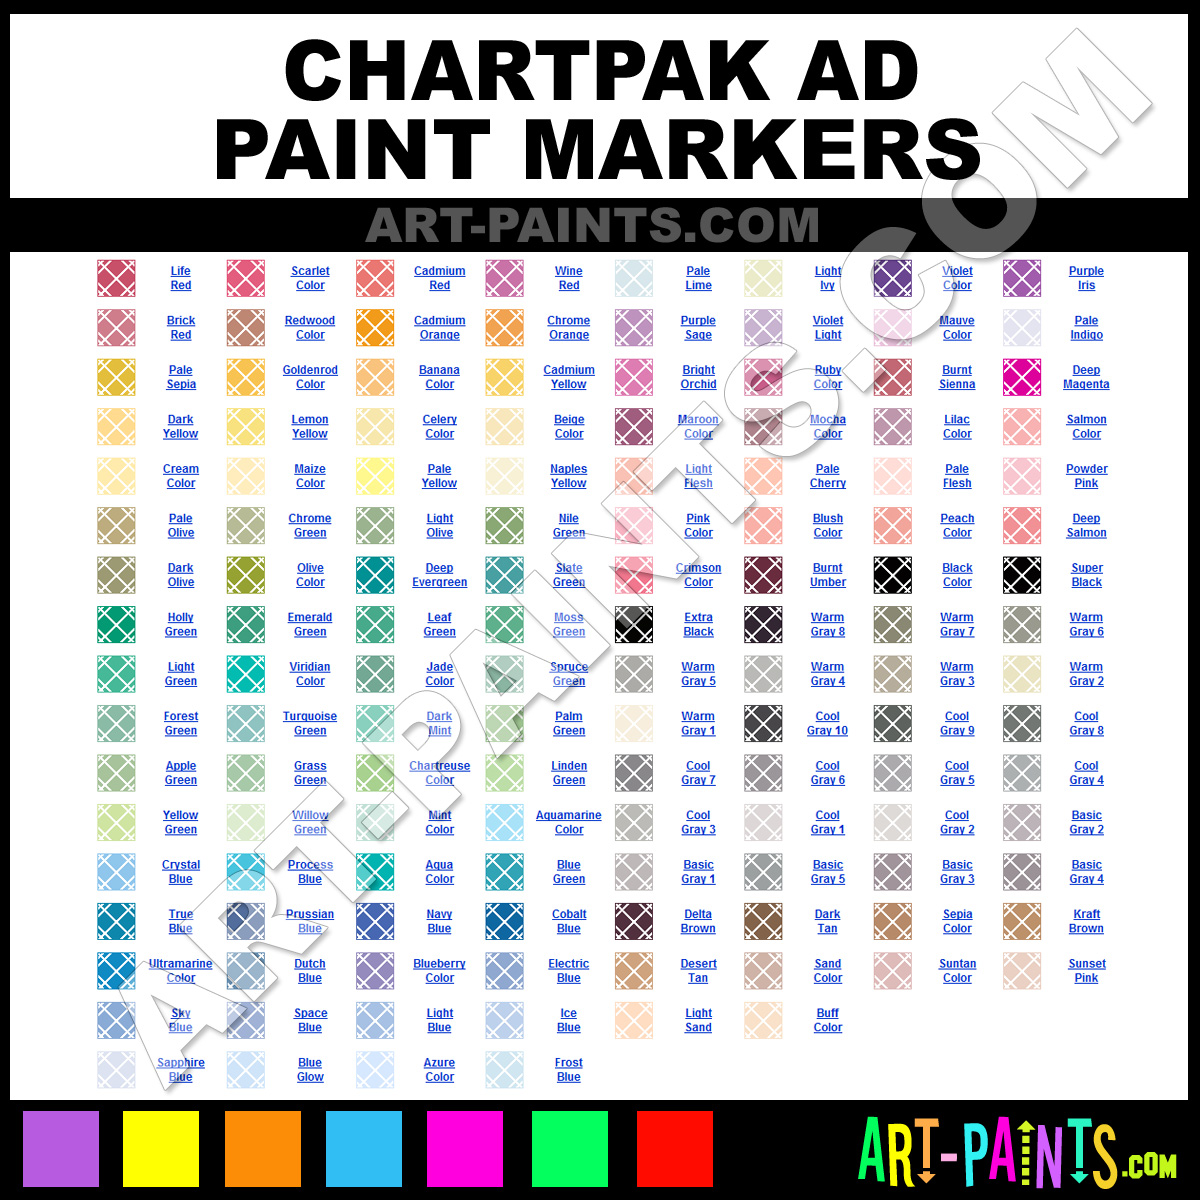 Chartpak, P182 Ad Marker Cool Gray 2